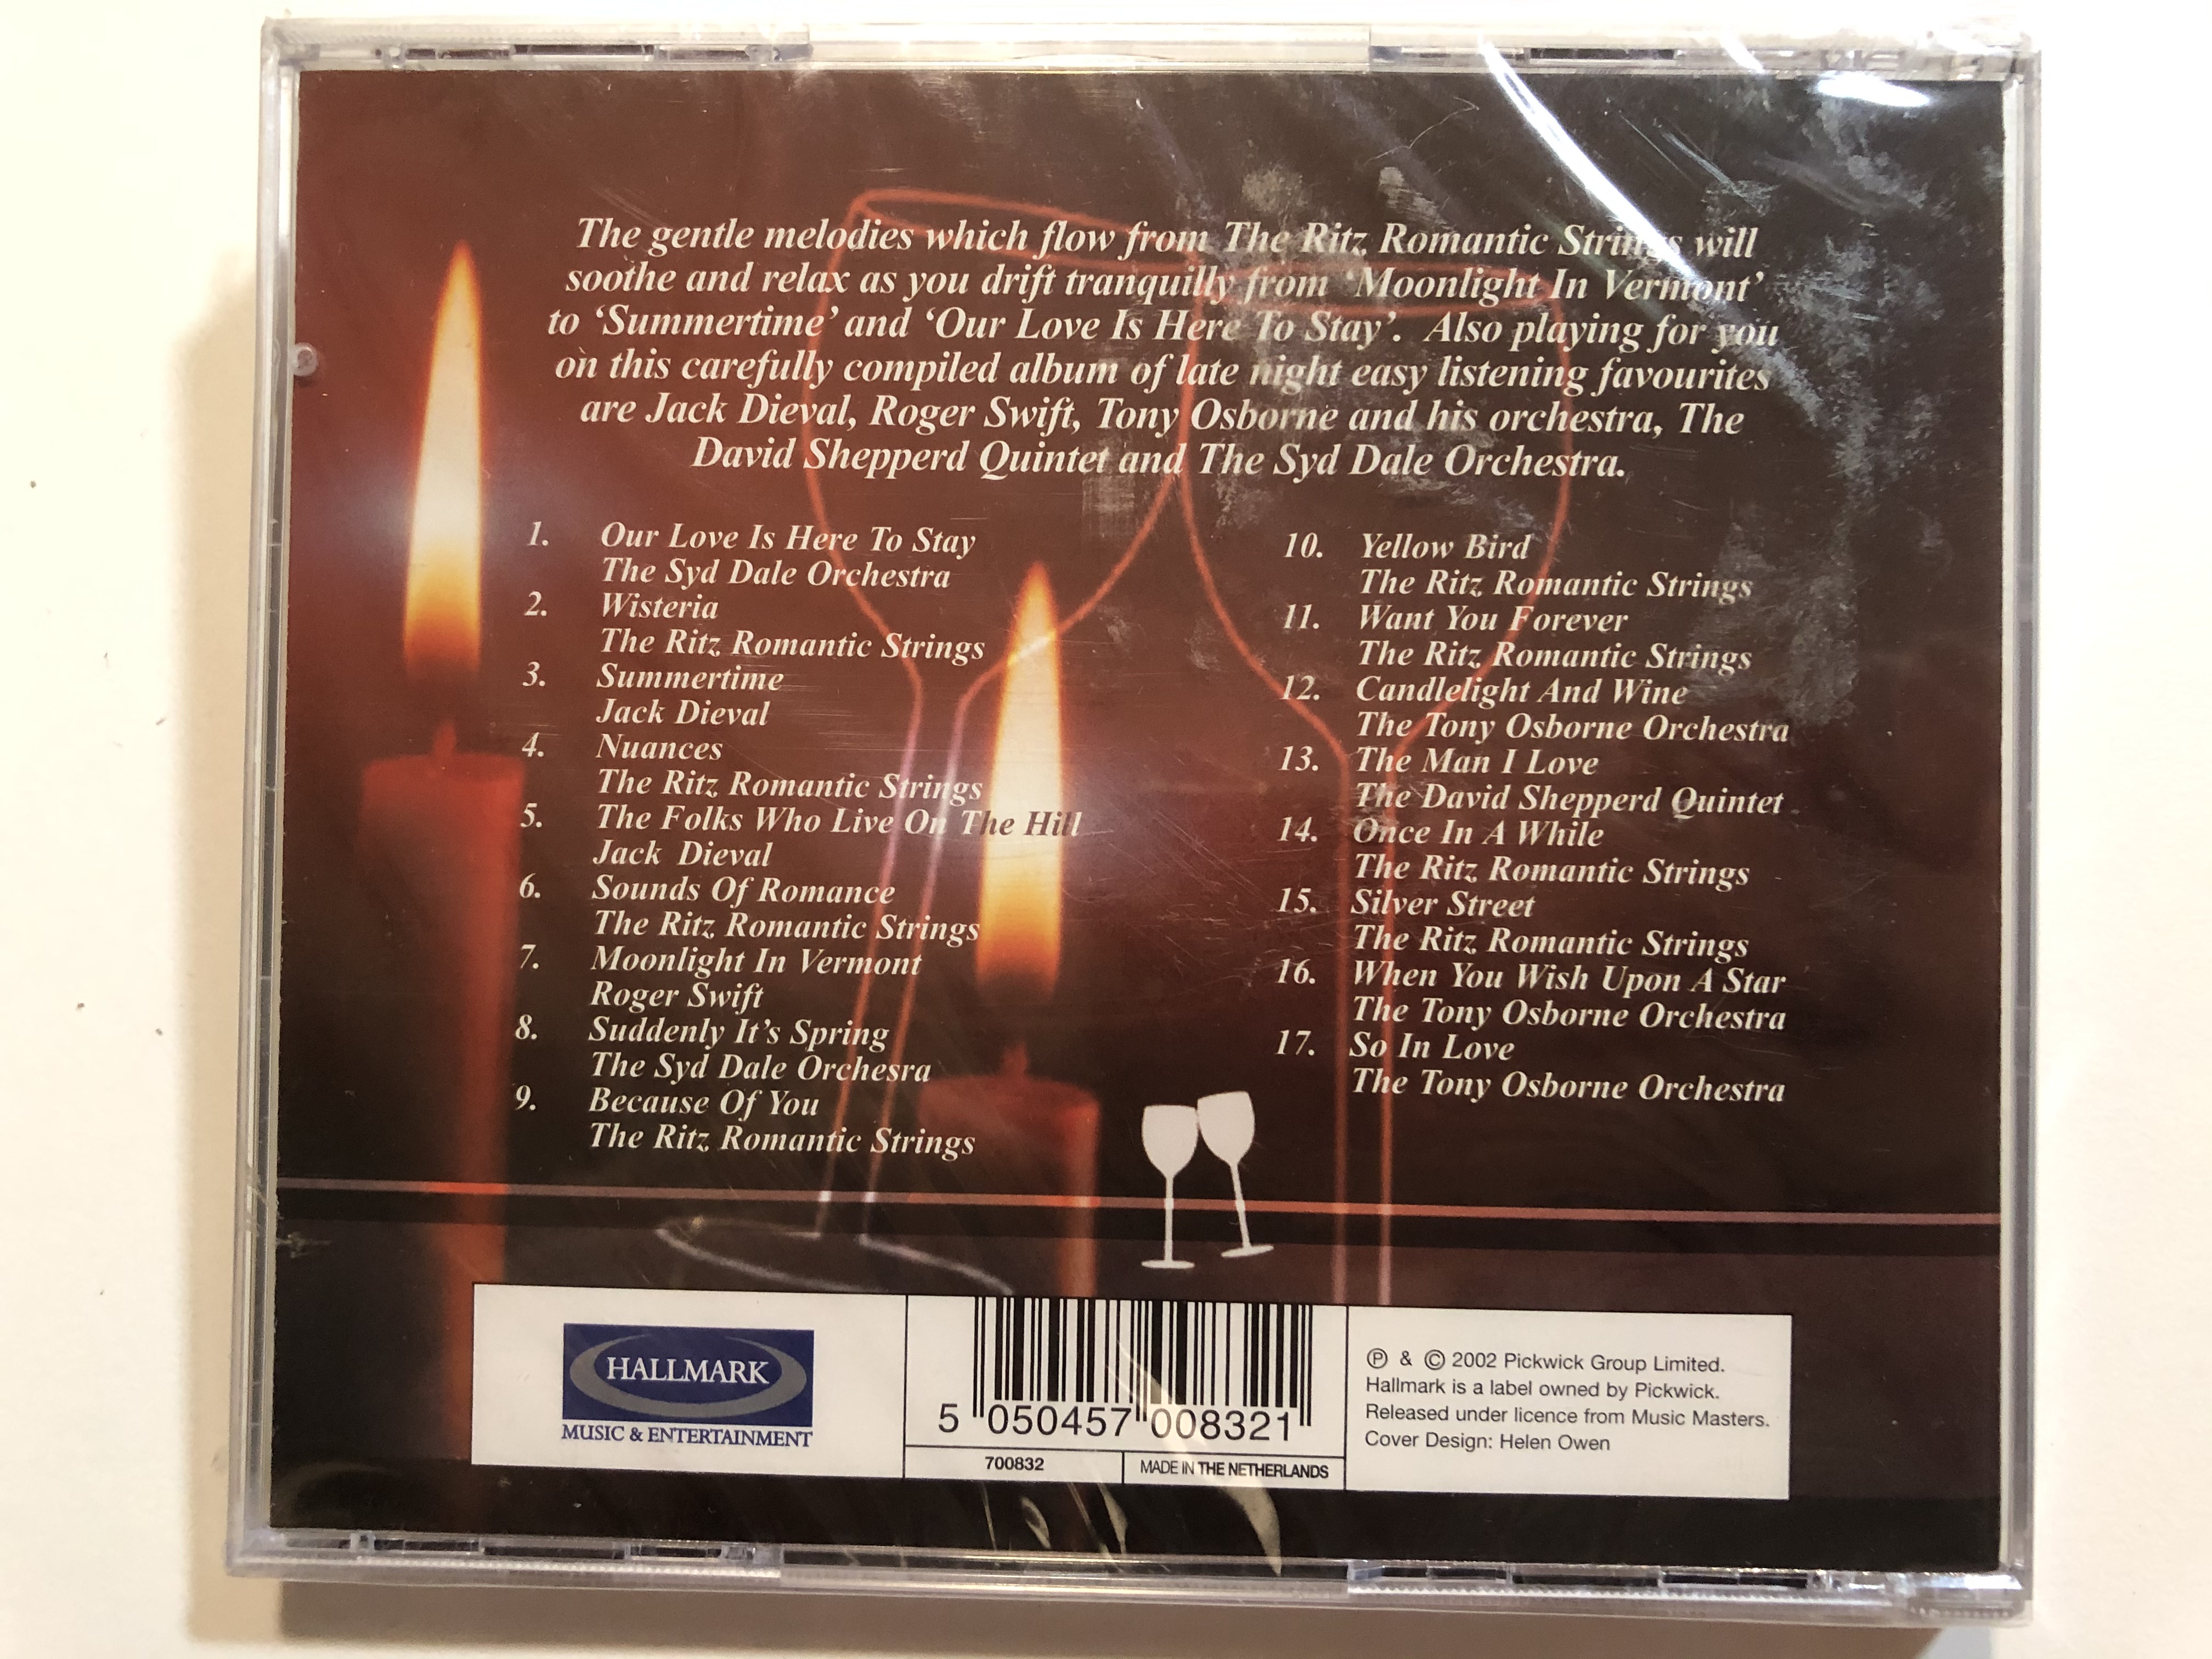 candlelight-wine-17-sensuous-silky-serenades-hallmark-audio-cd-2002-700832-2-.jpg